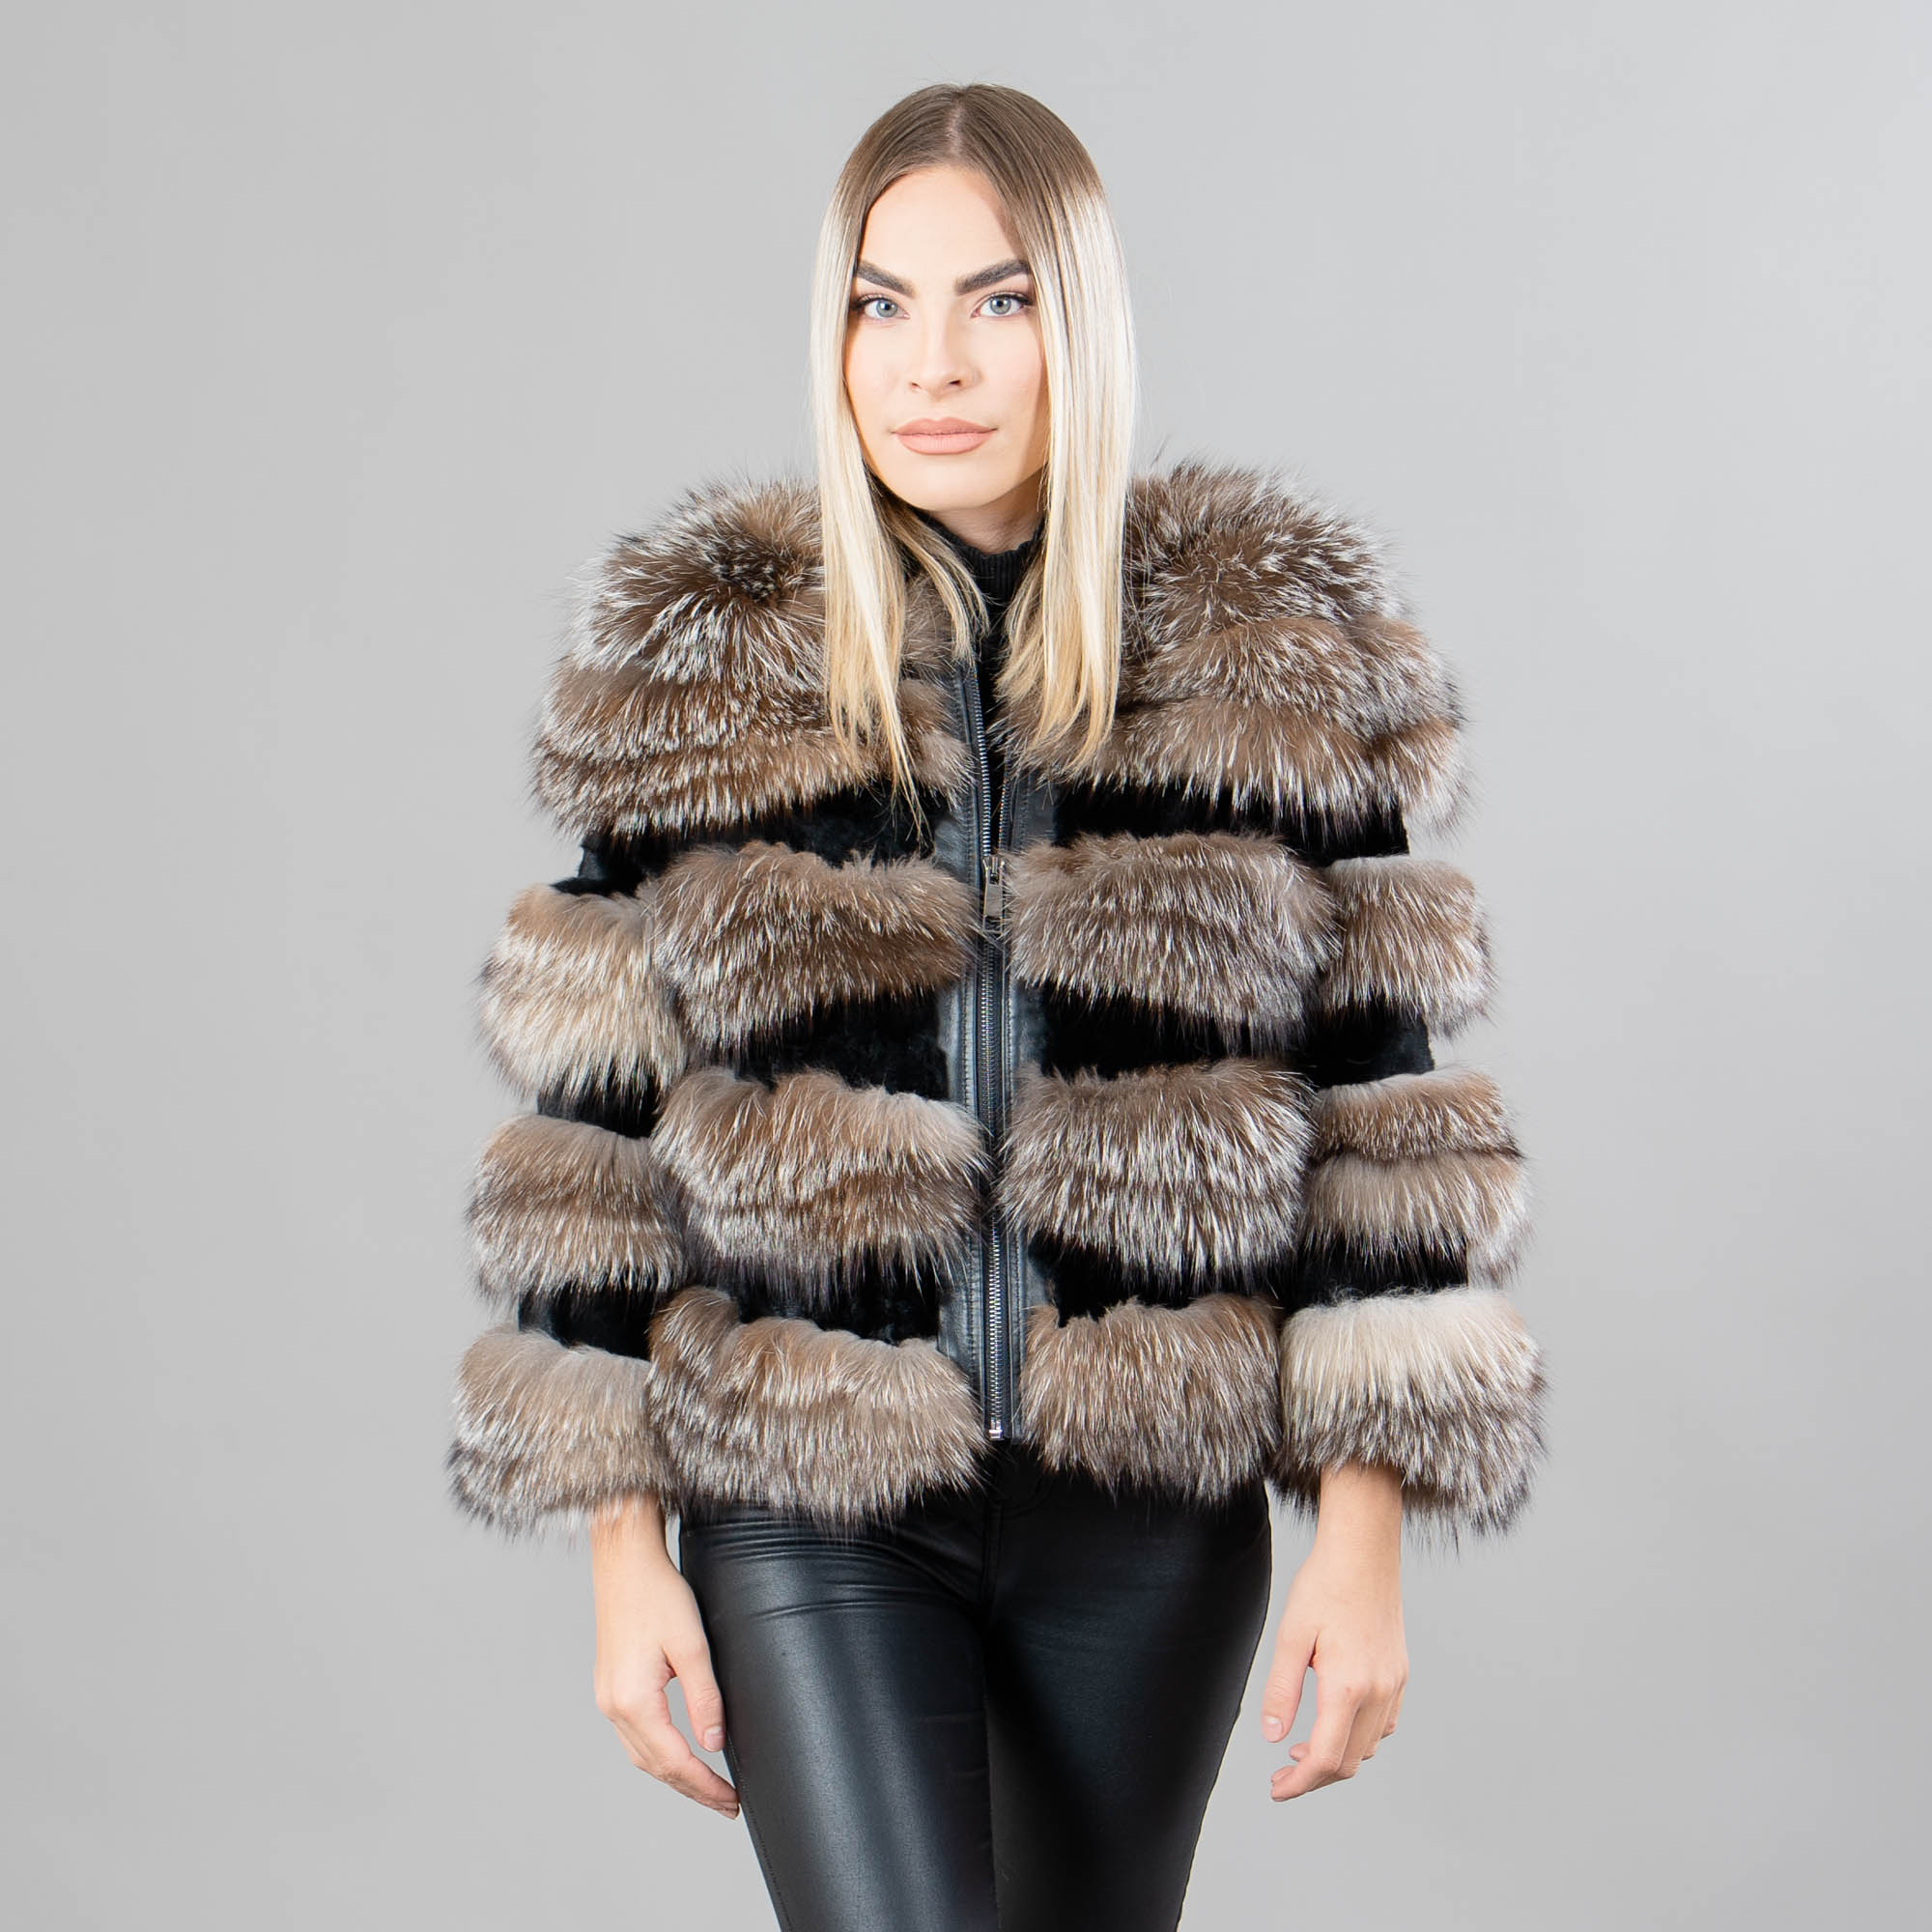 Brown fox fur jacket with rabbit fur details